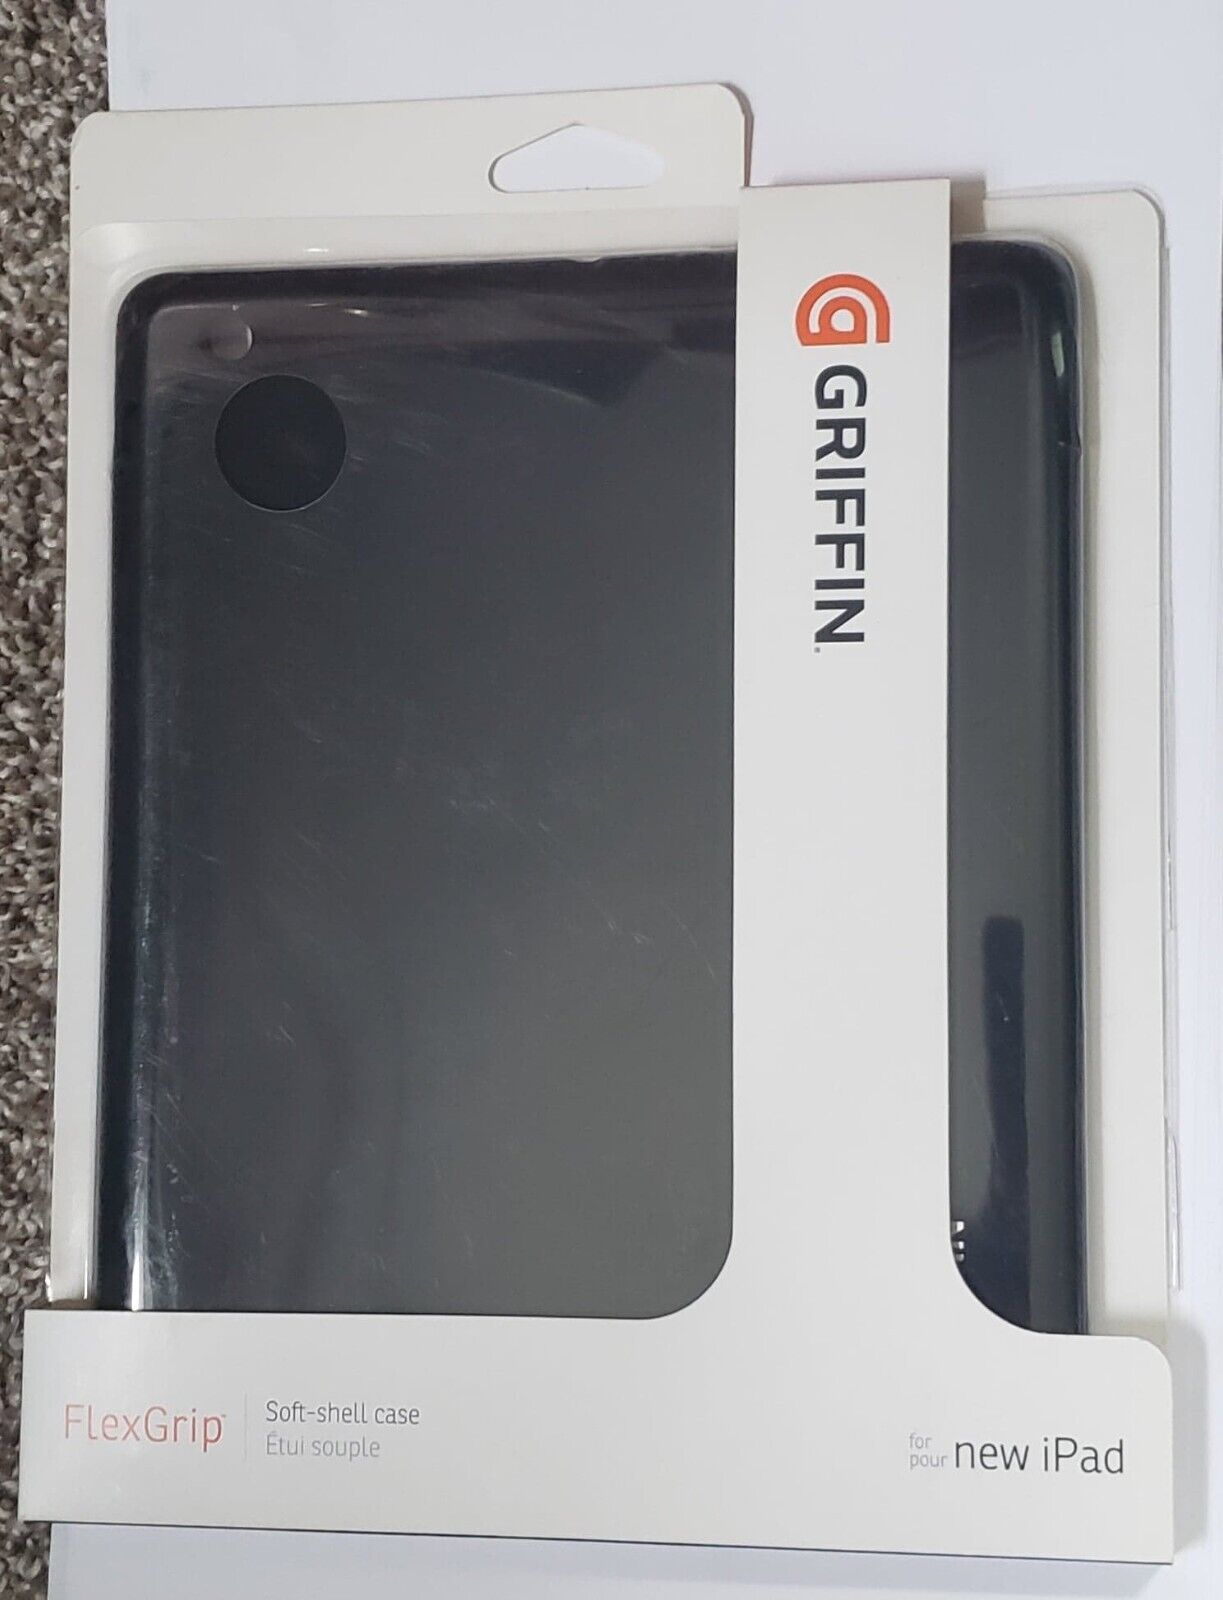 Griffin FlexGrip Gel Case Cover Shell New iPad Generation 1 GB02538